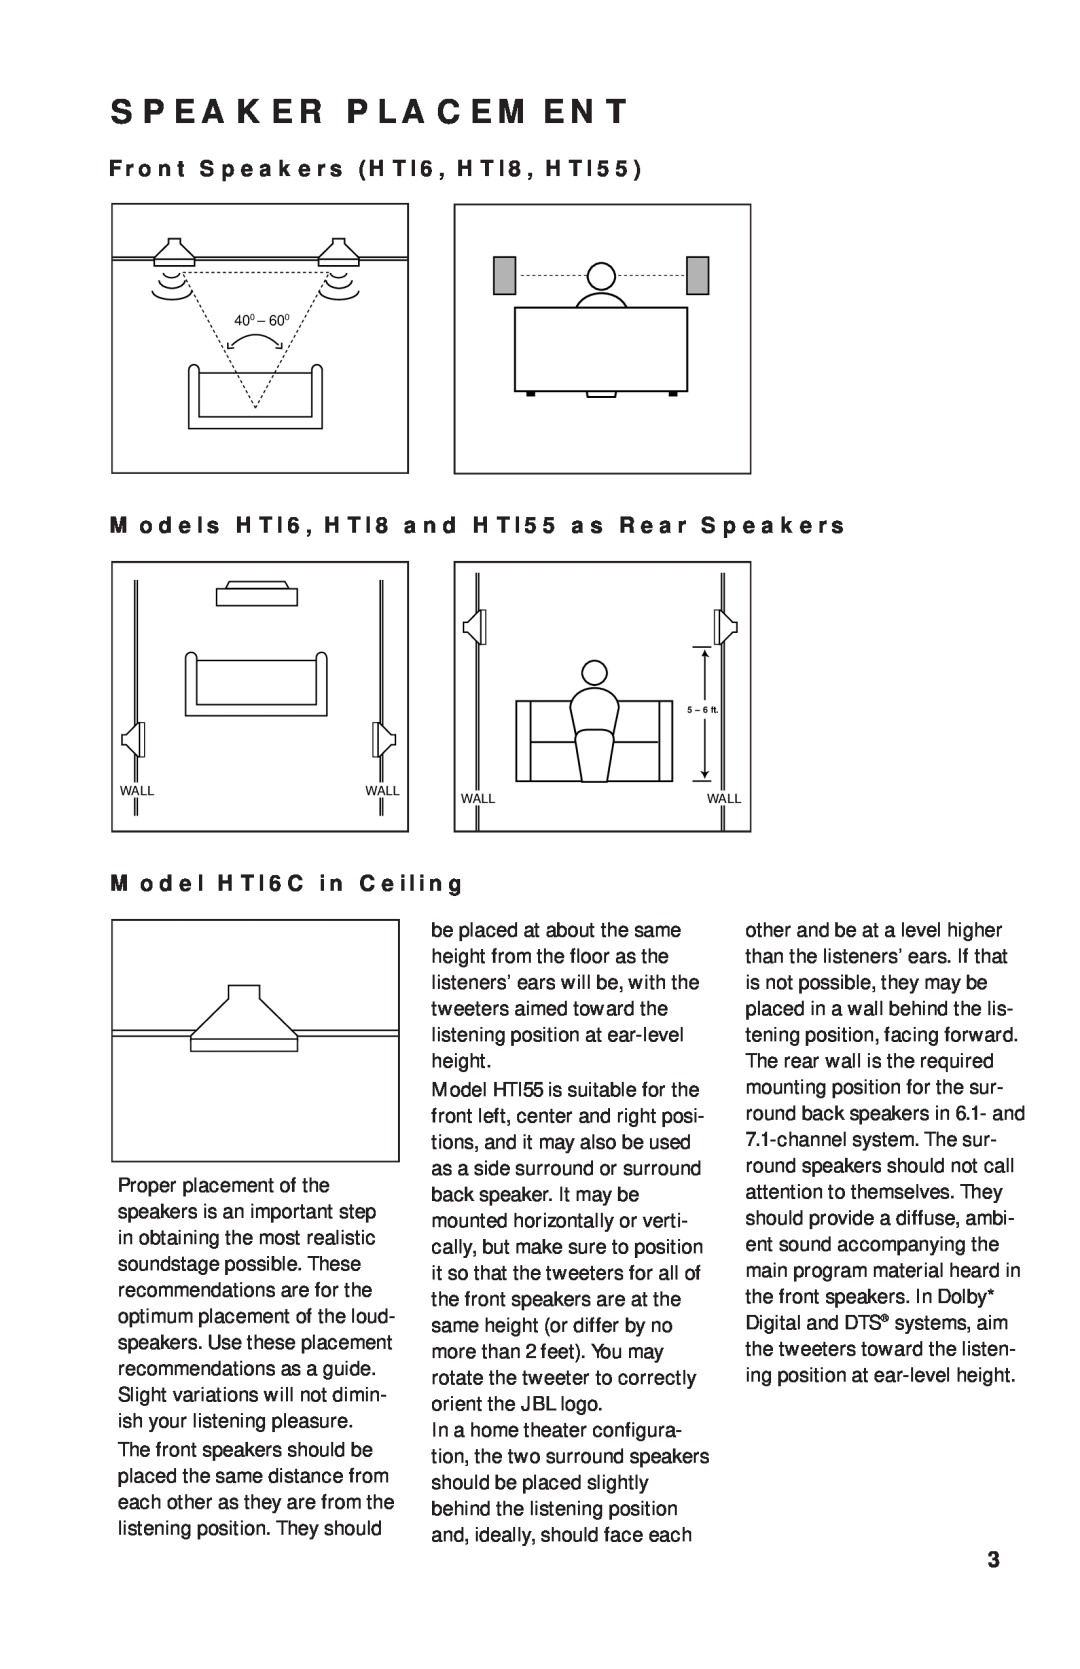 JBL manual Speaker Placement, Front Speakers HTI6, HTI8, HTI55, Models HTI6, HTI8 and HTI55 as Rear Speakers 